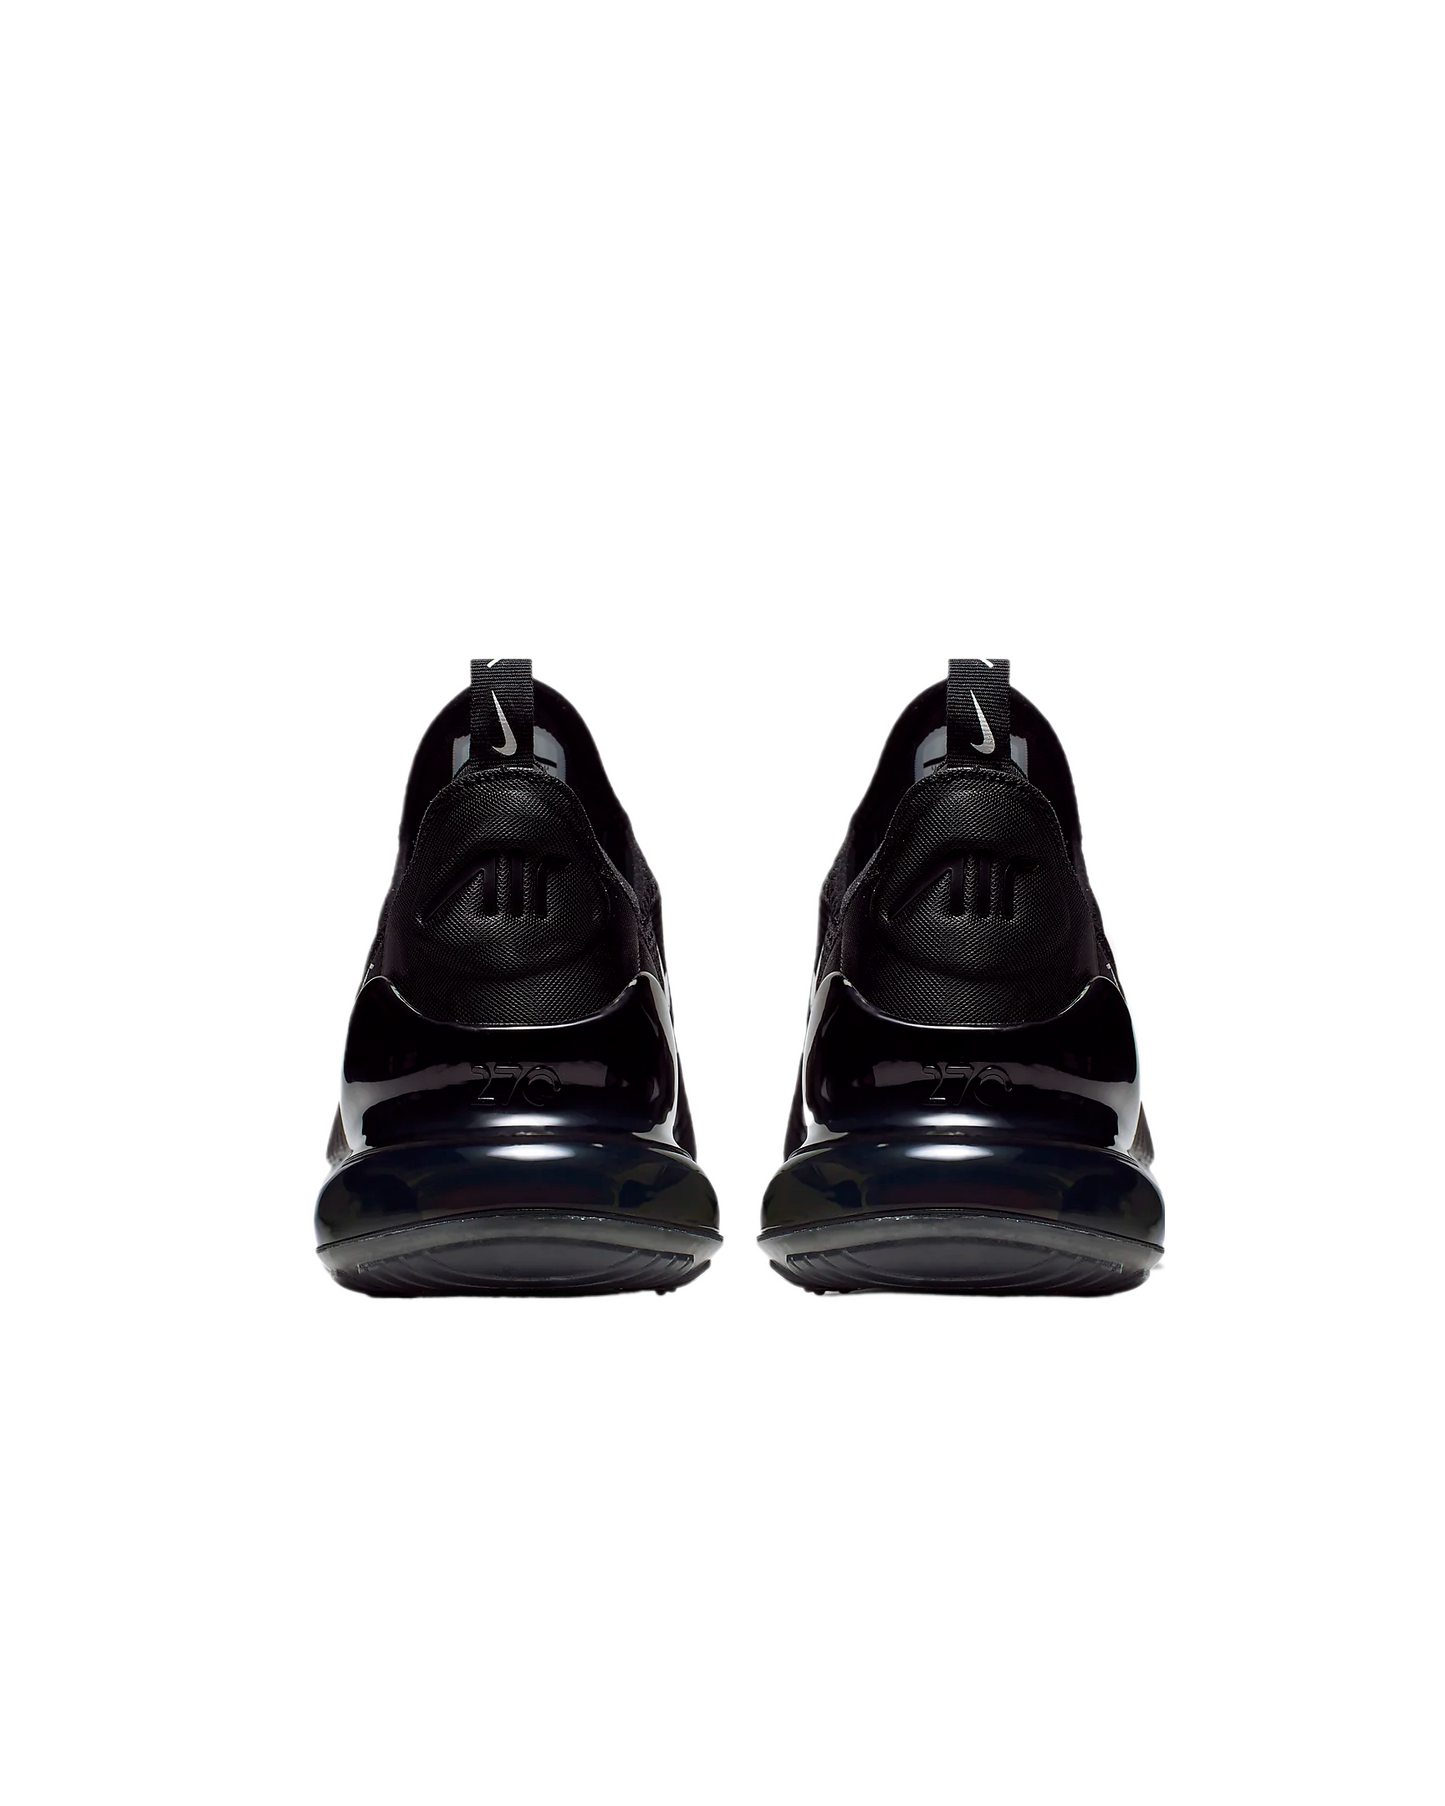 Nike Men Air Max 270 Sneaker Black / Anthracite-White AH8050-002